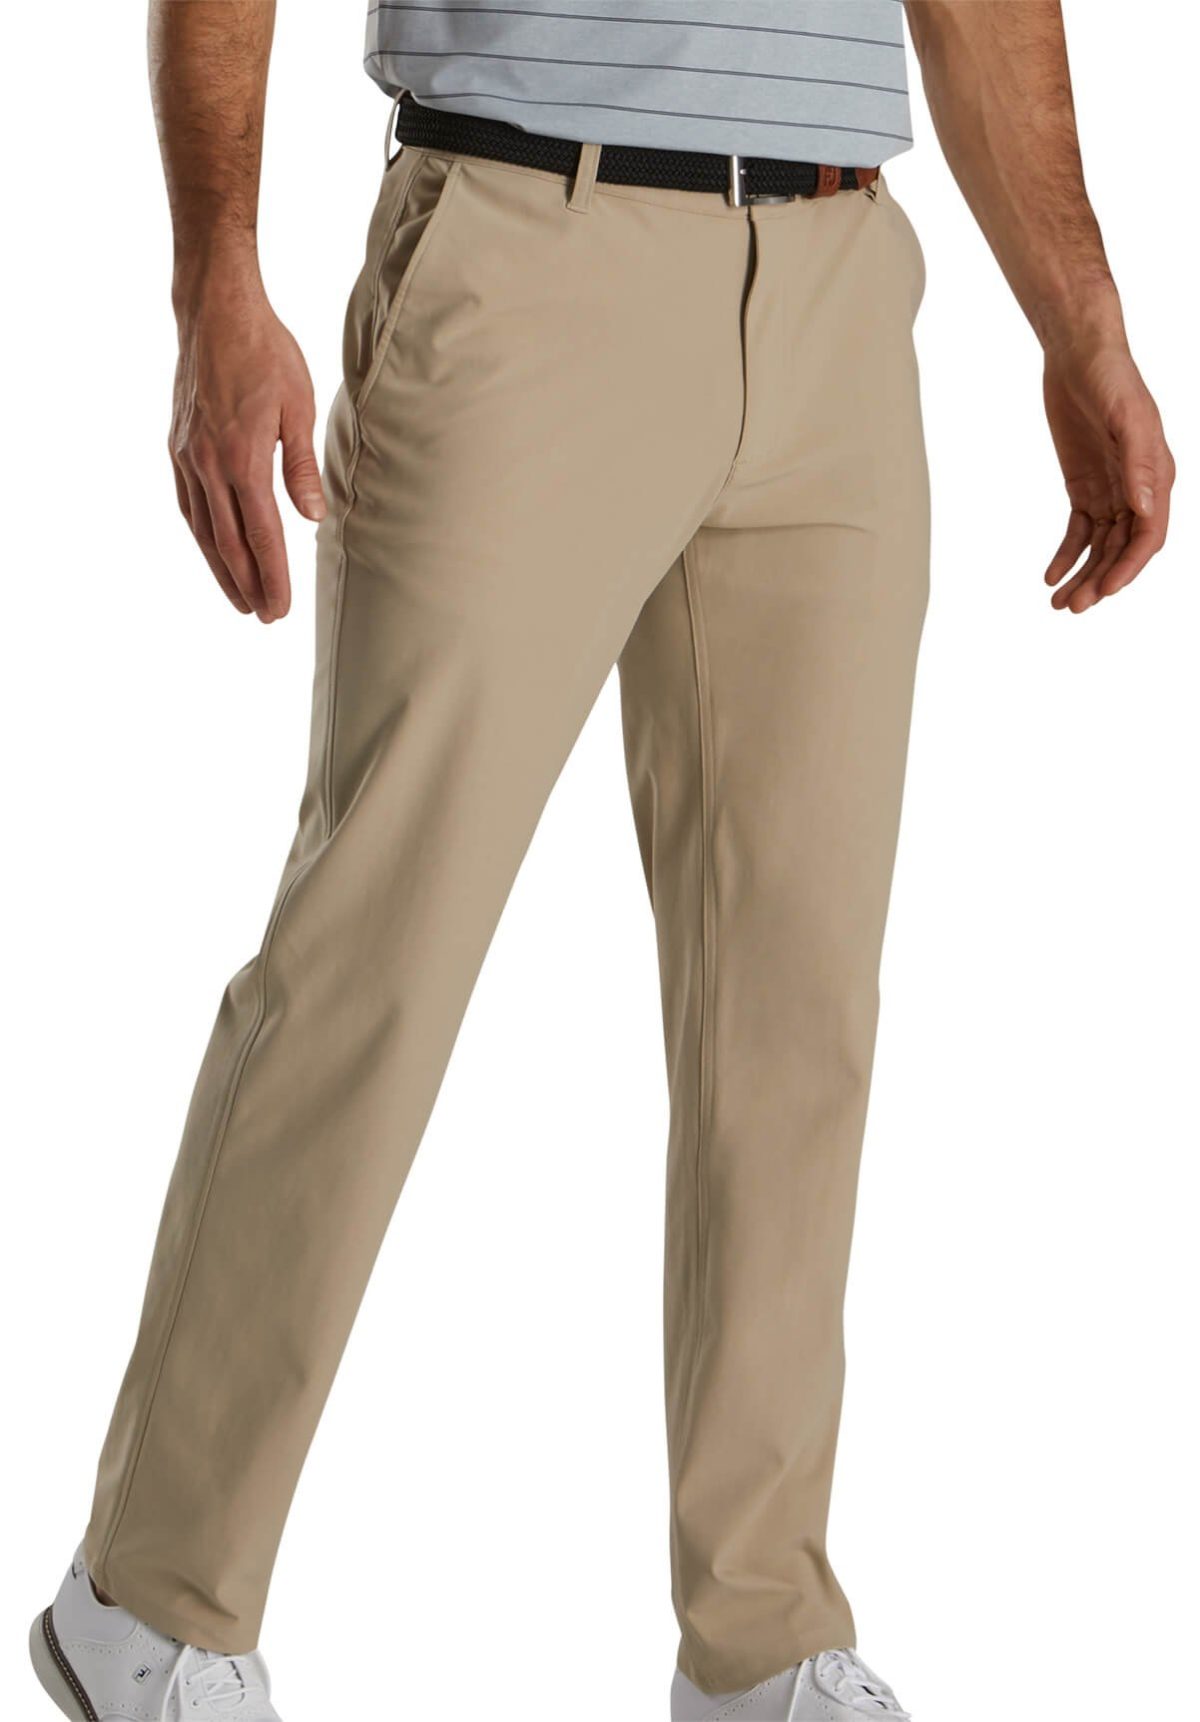 FootJoy Men's Performance Knit Golf Pants, 100% Polyester in Khaki, Size 30x30